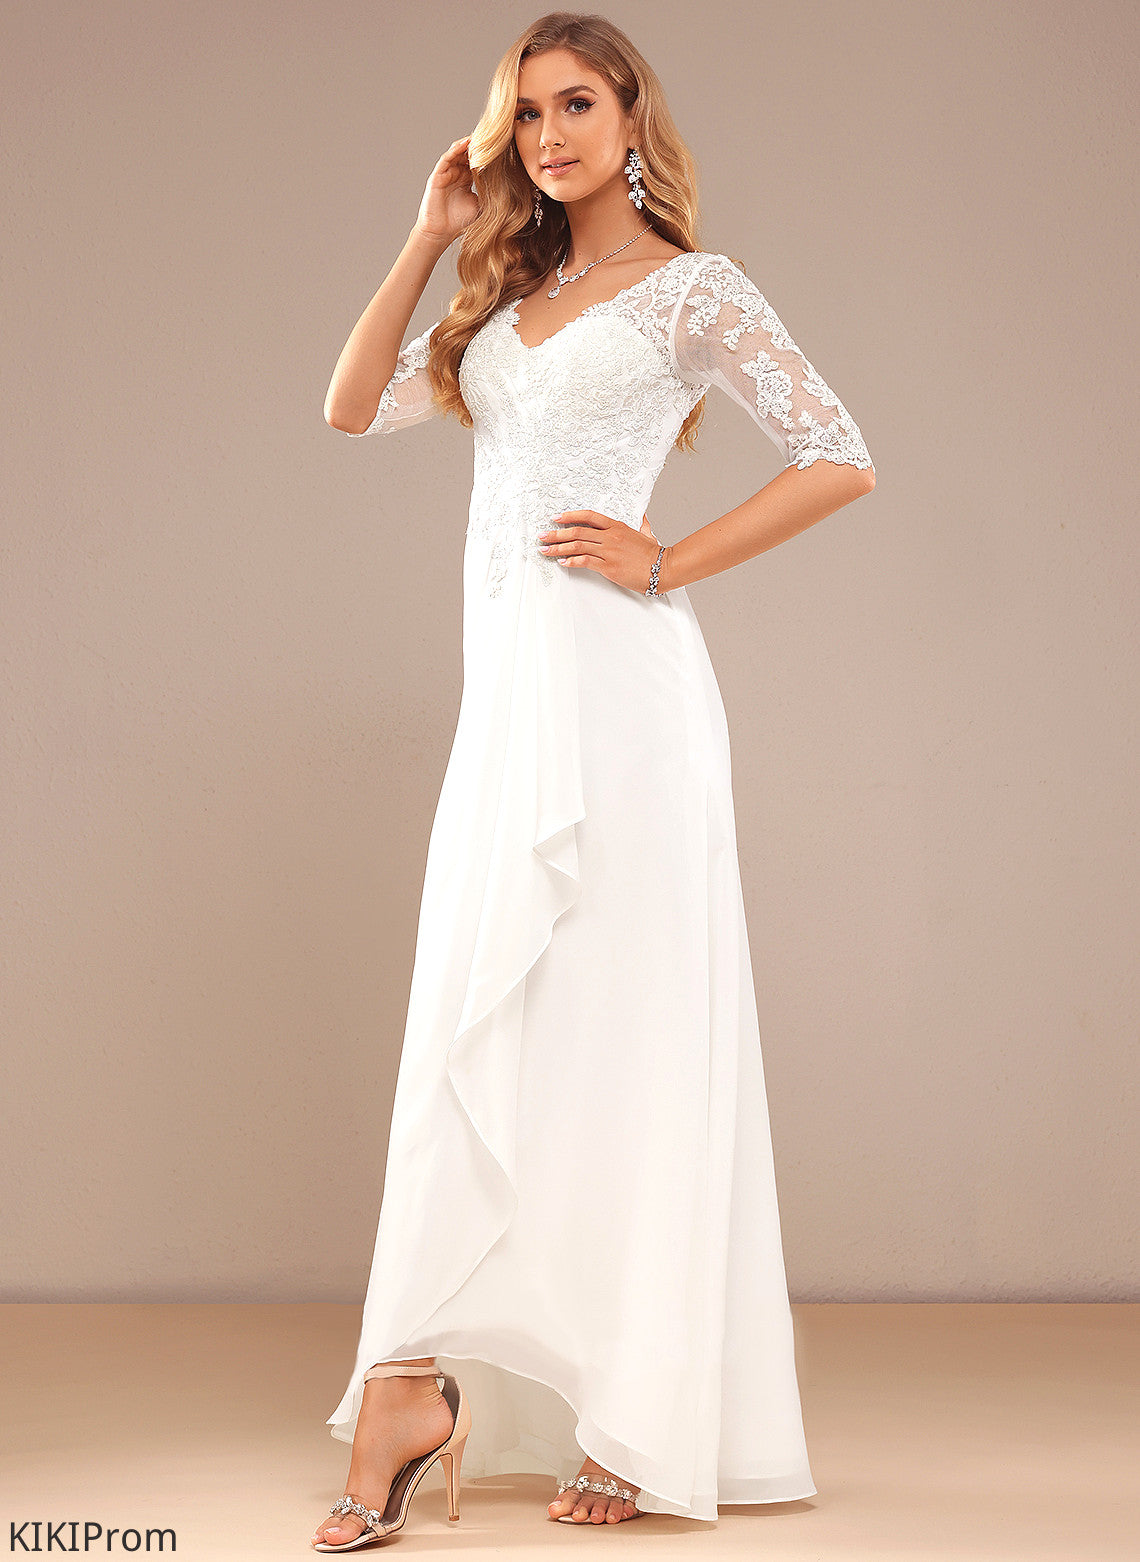 With Wedding Dresses Asymmetrical Wedding A-Line V-neck Mariah Dress Chiffon Ruffle Lace